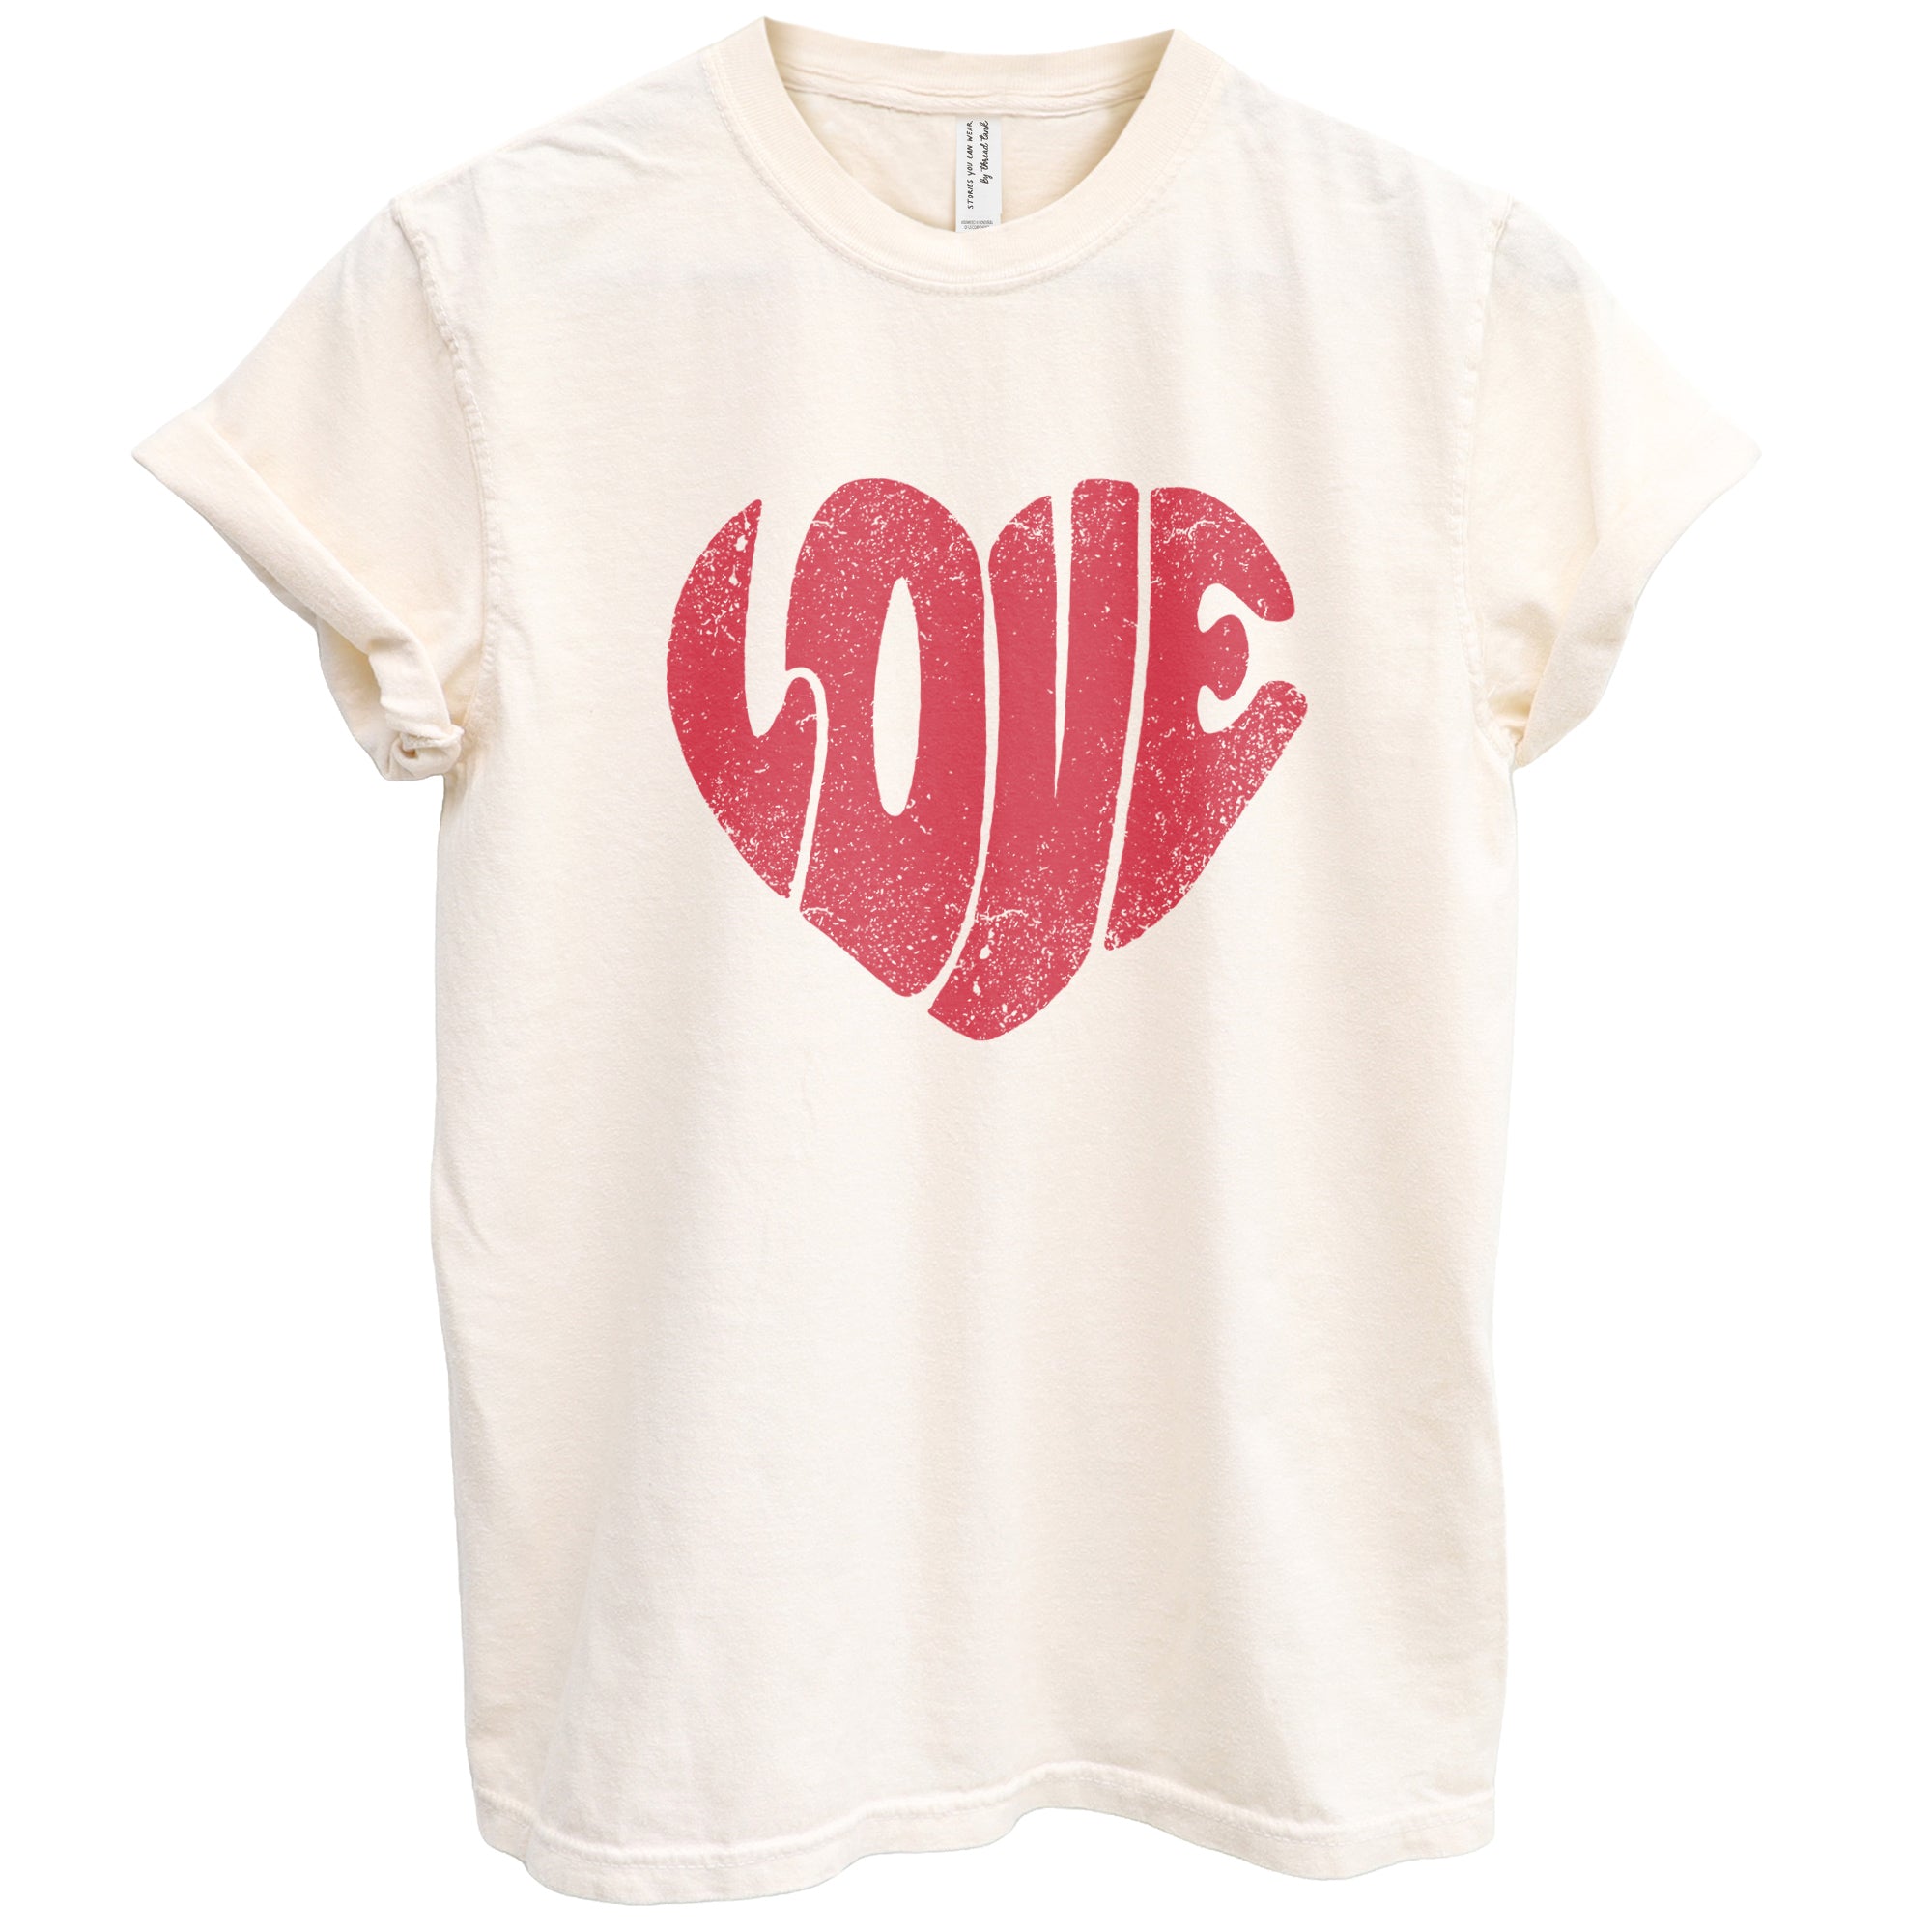 Retro Heart Shirt Garment-Dyed Tee